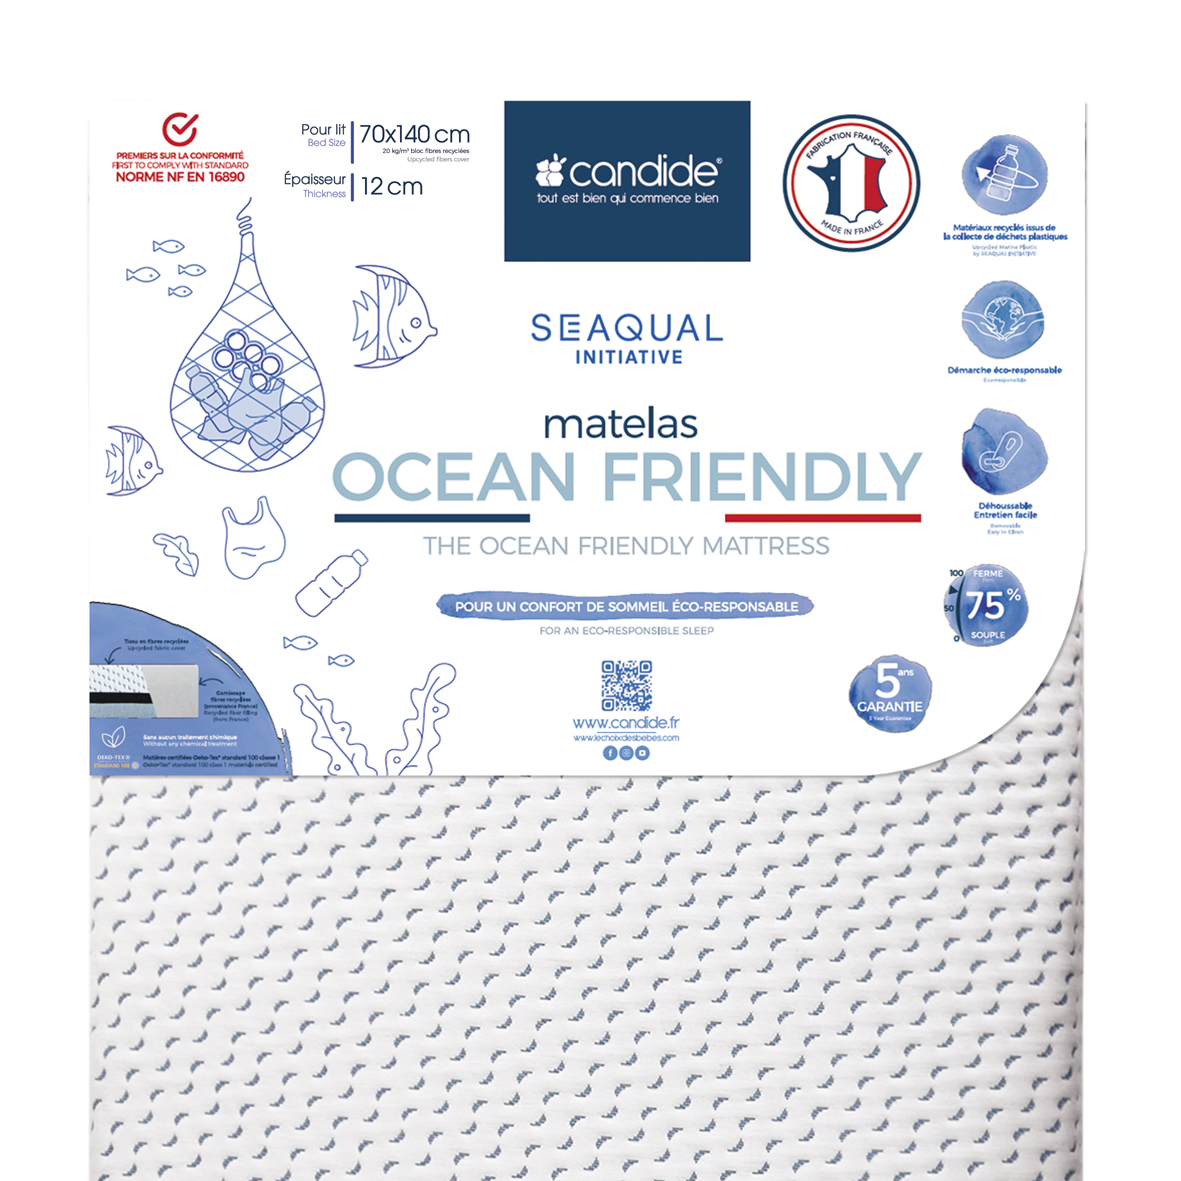 Matelas Ocean Friendly BLANC Candide